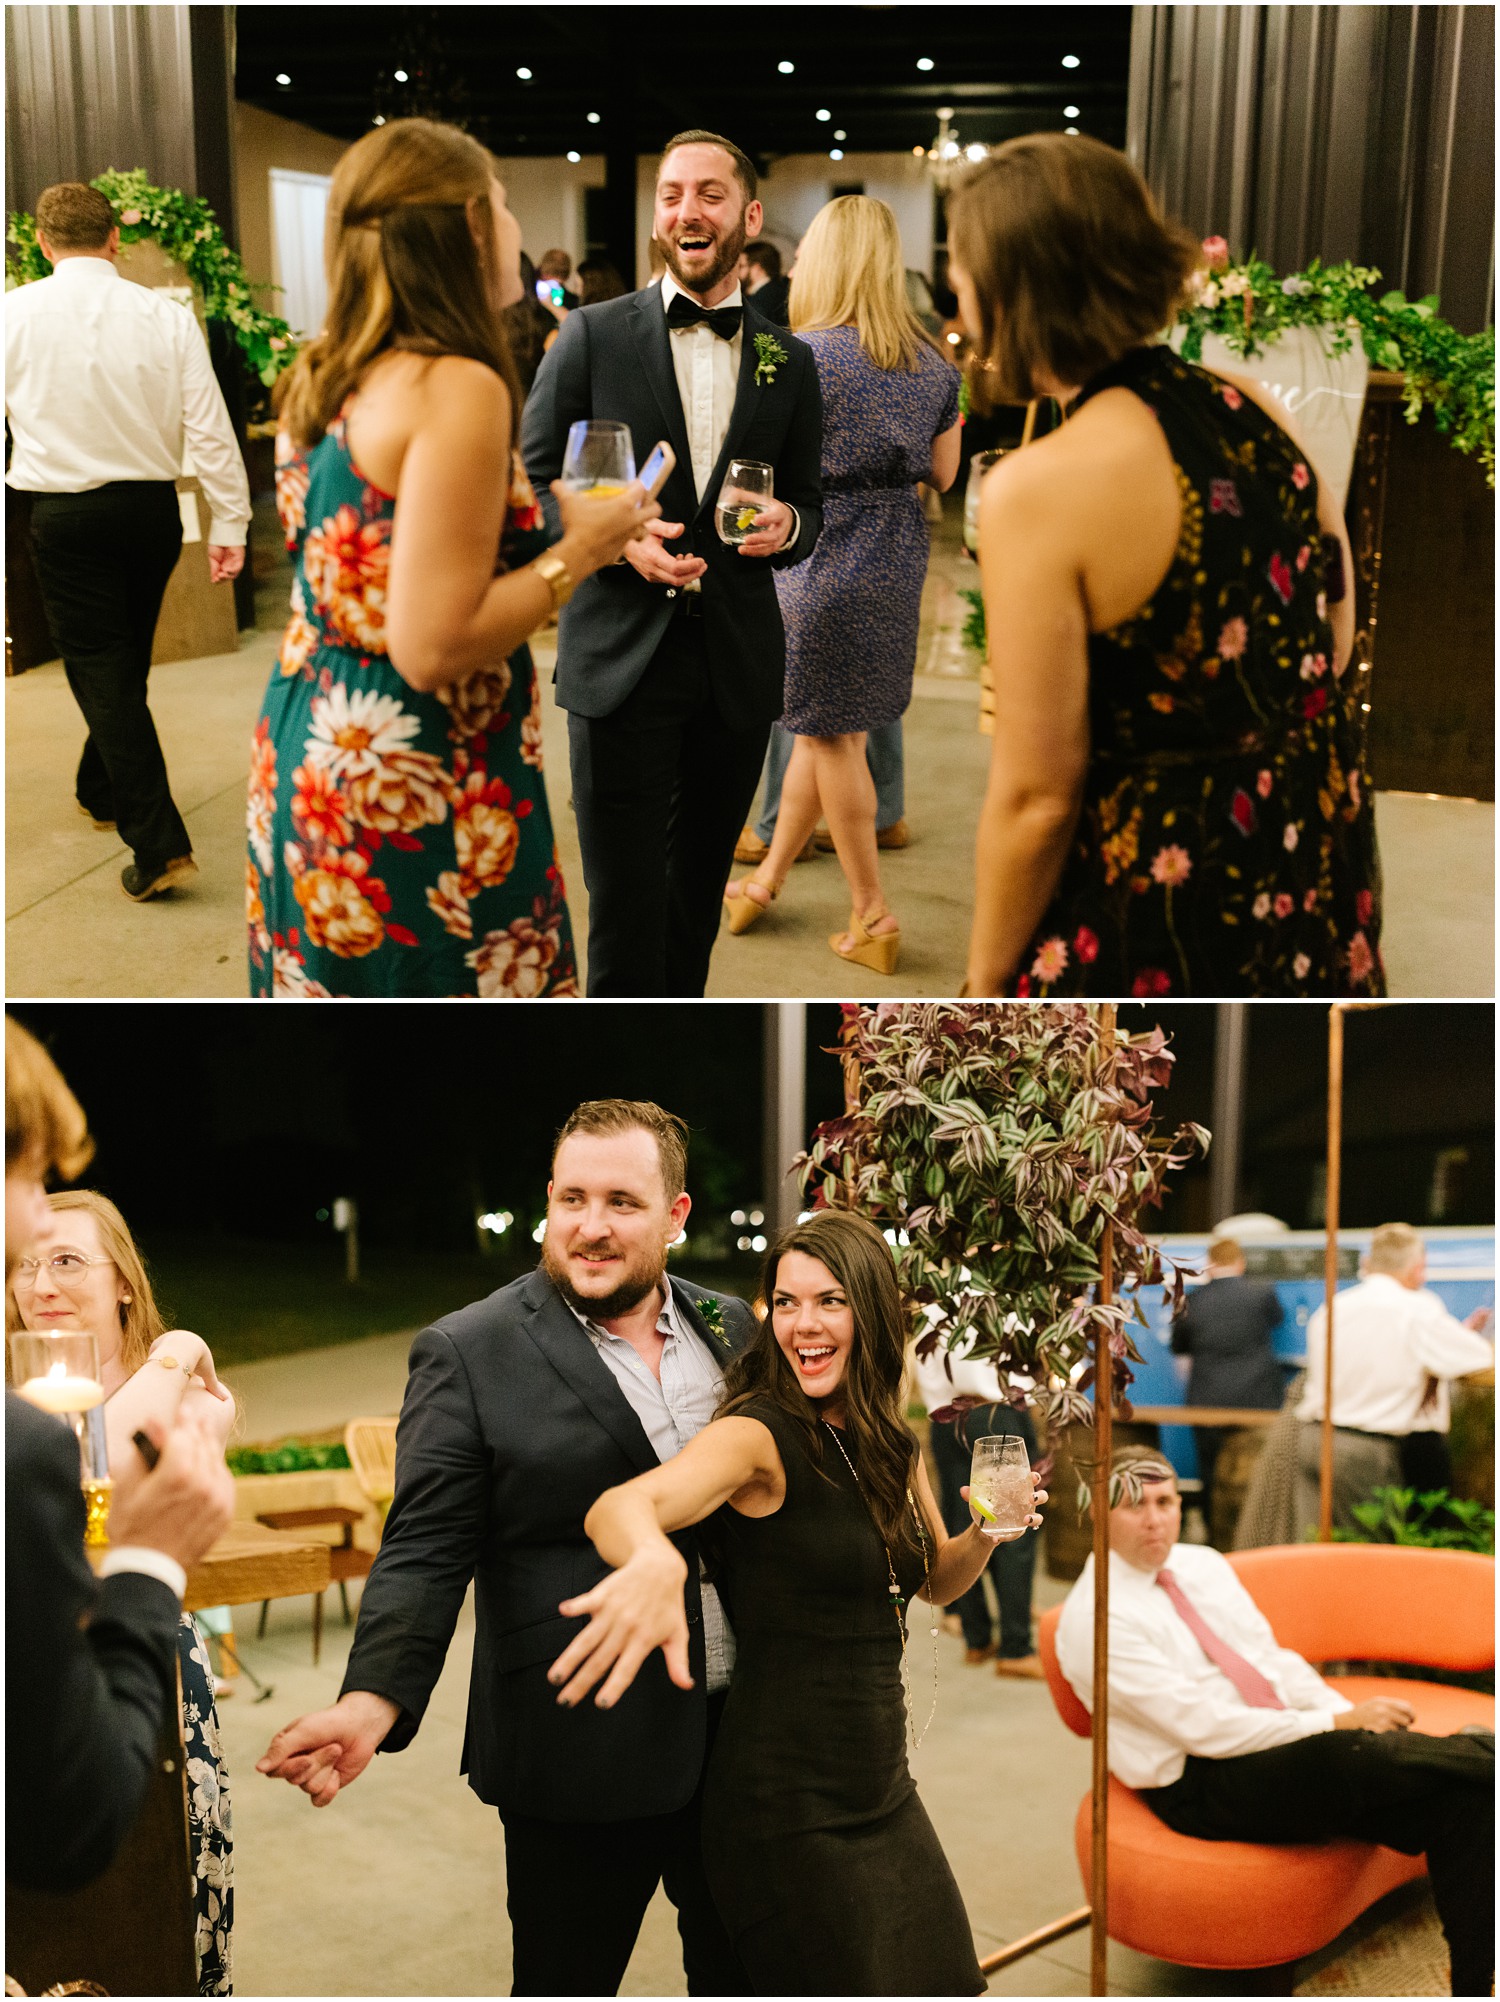 Raleigh NC wedding reception dancing